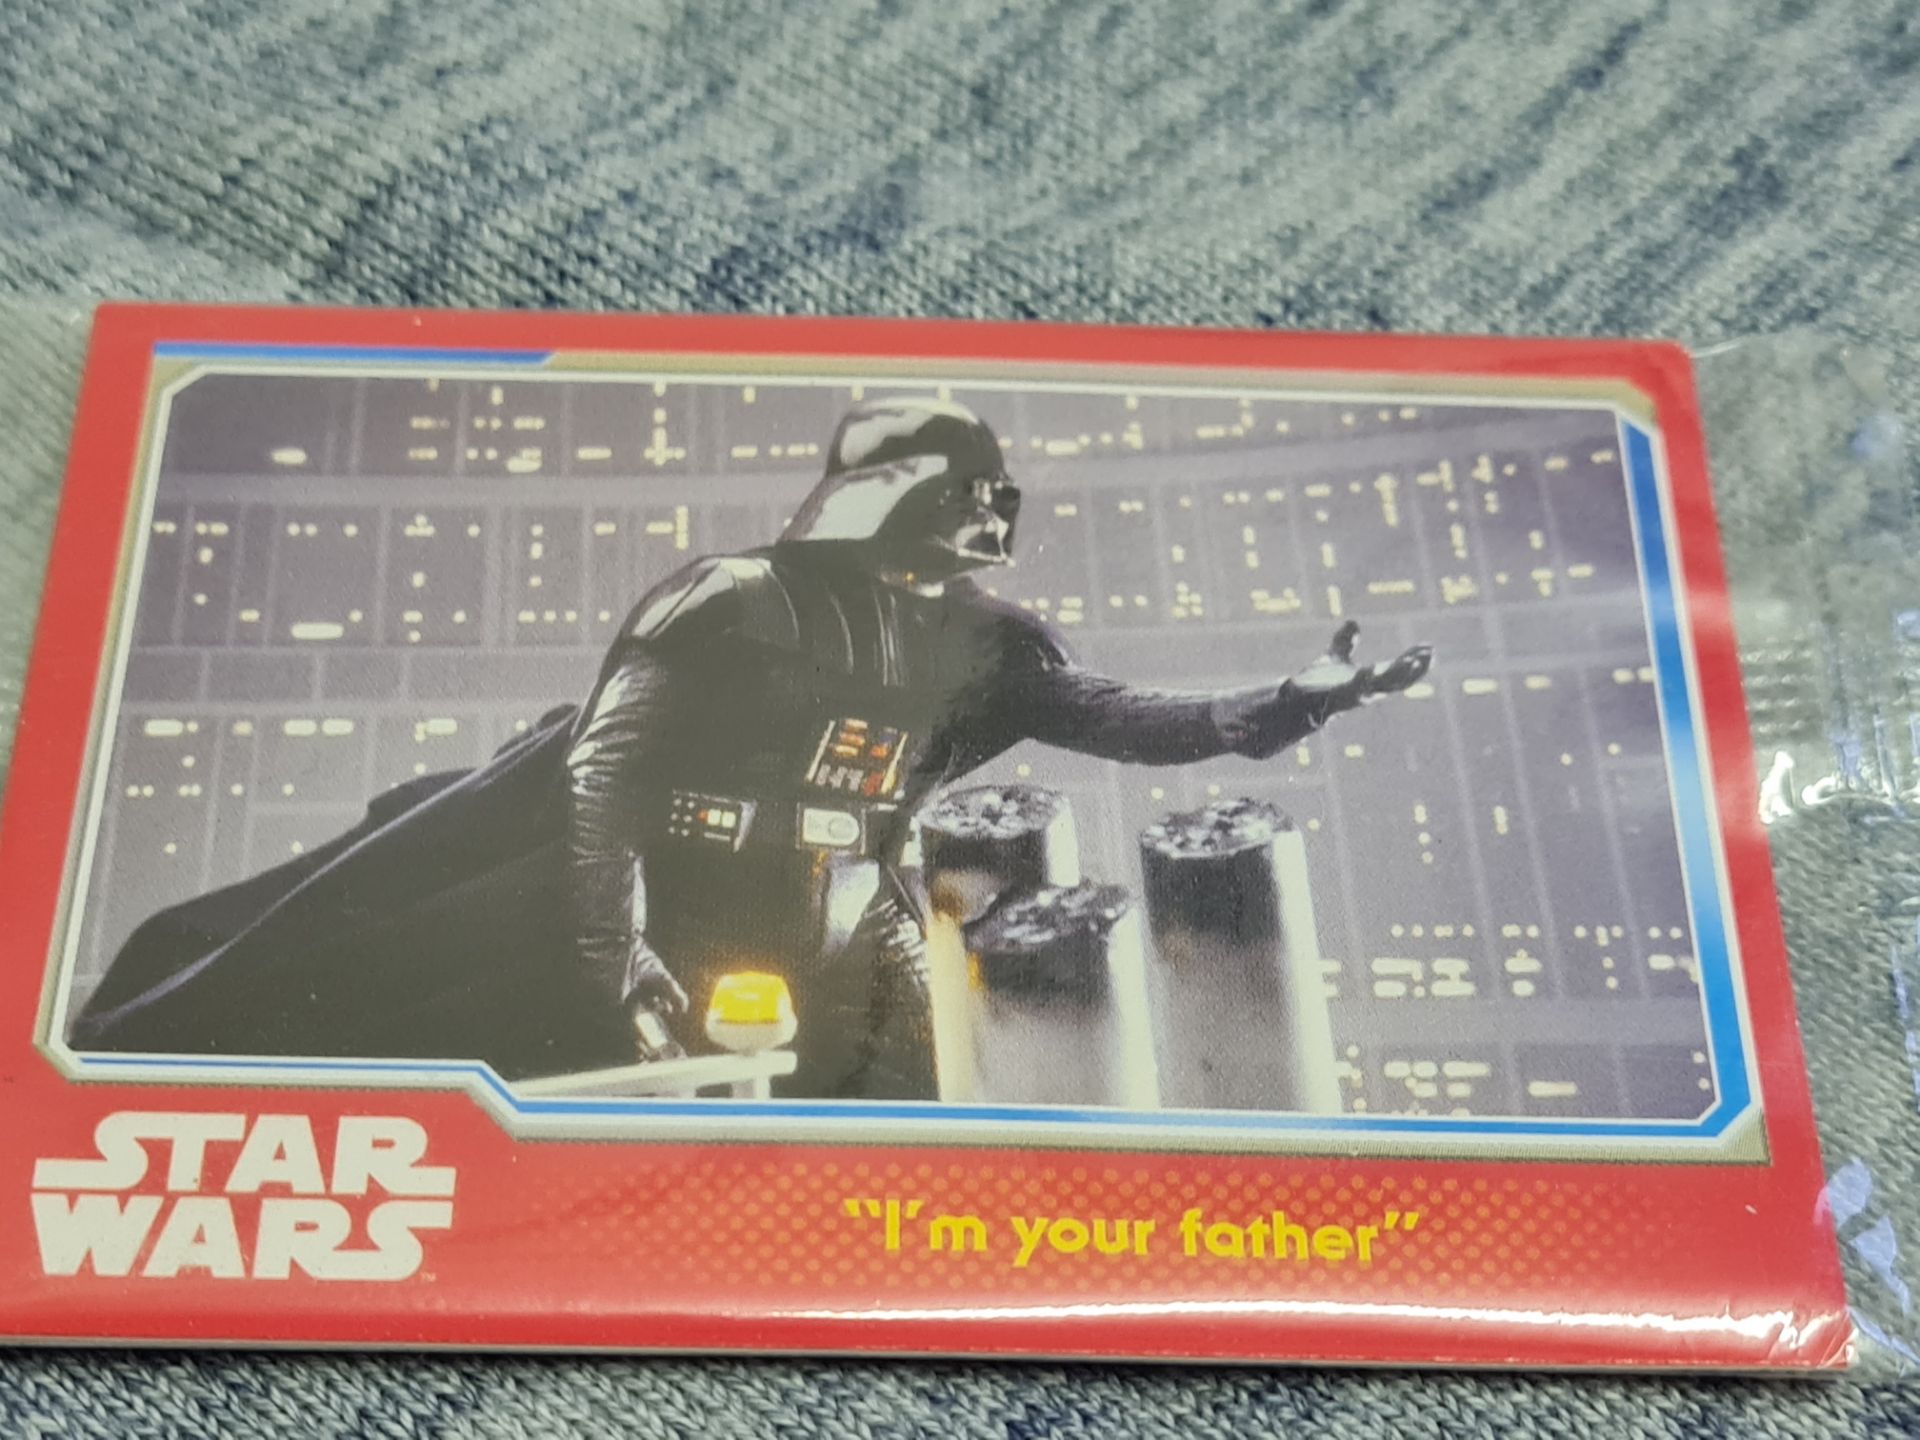 Star wars collectors card